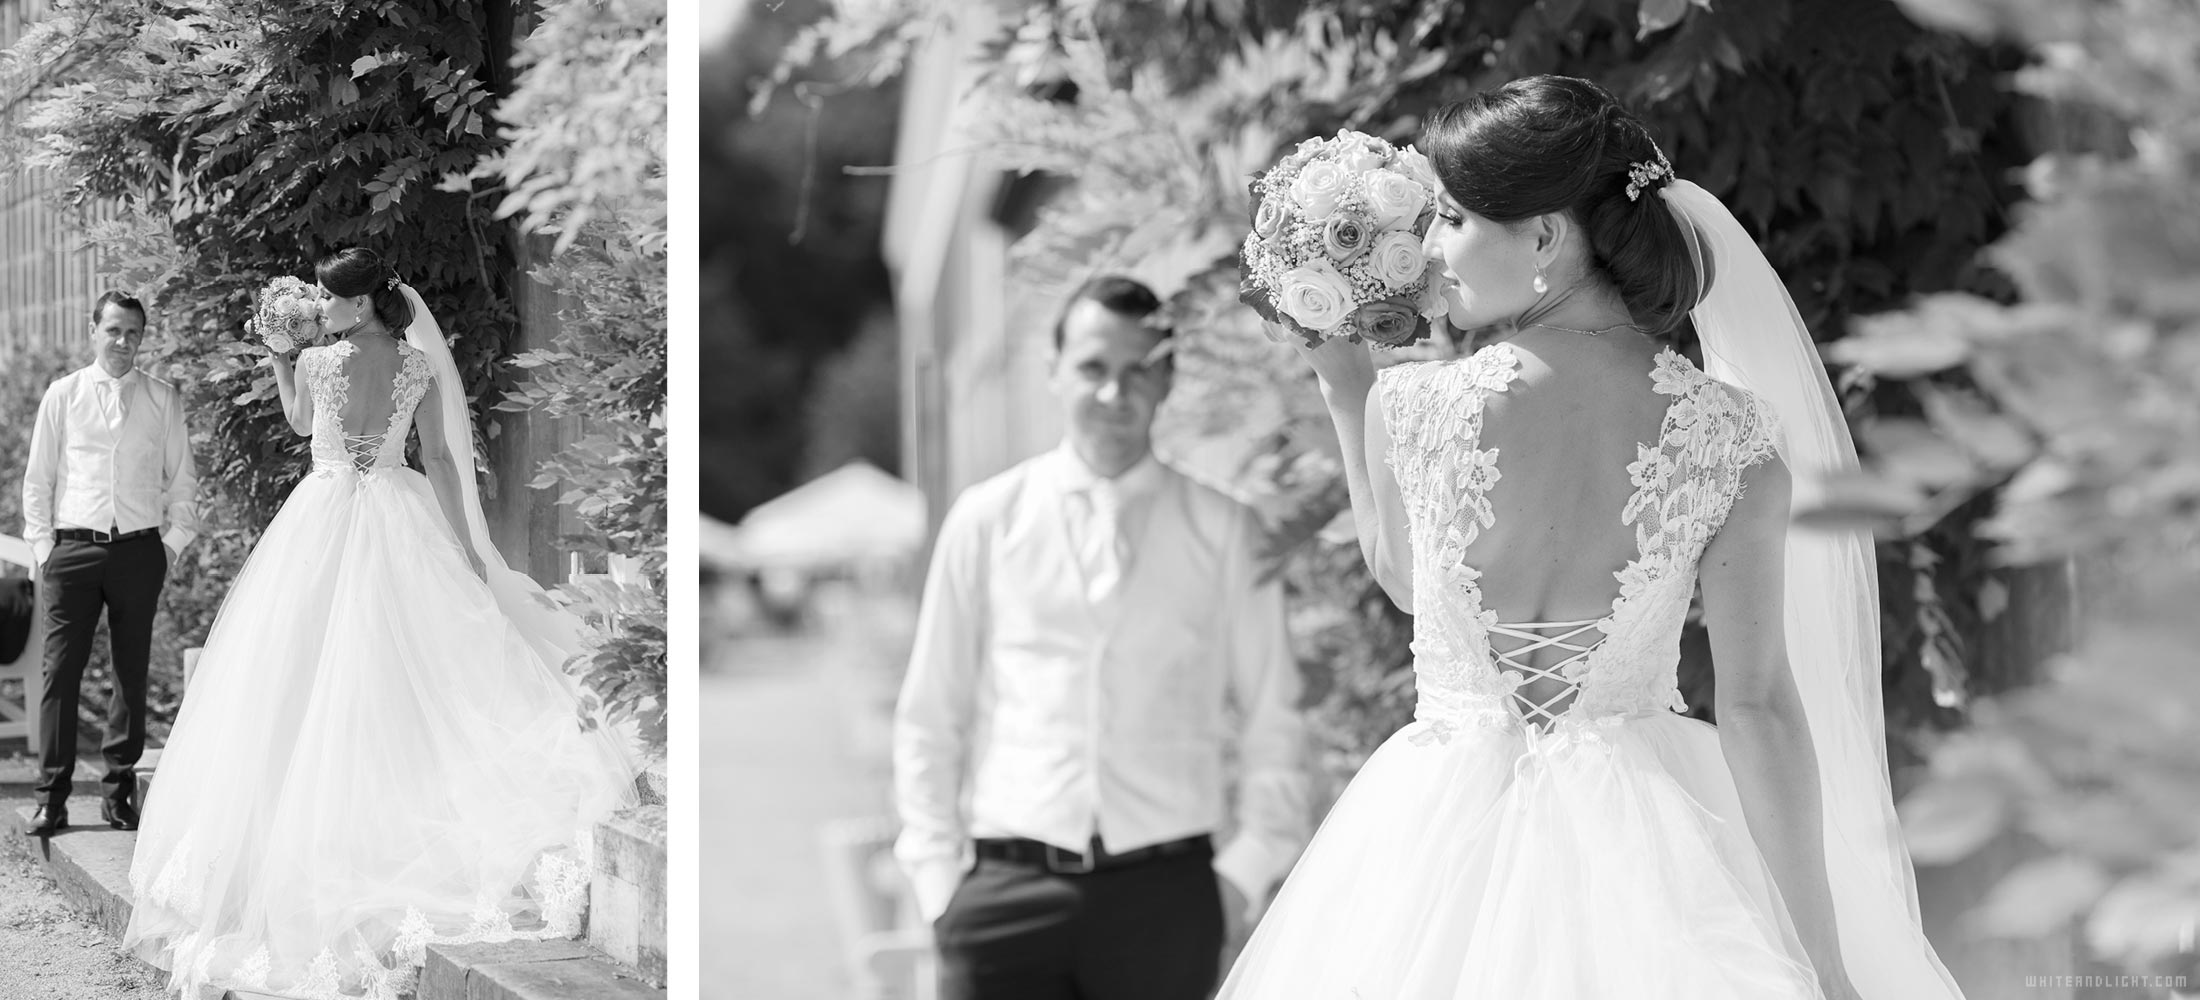 Professional photographer Munich - wedding dresses